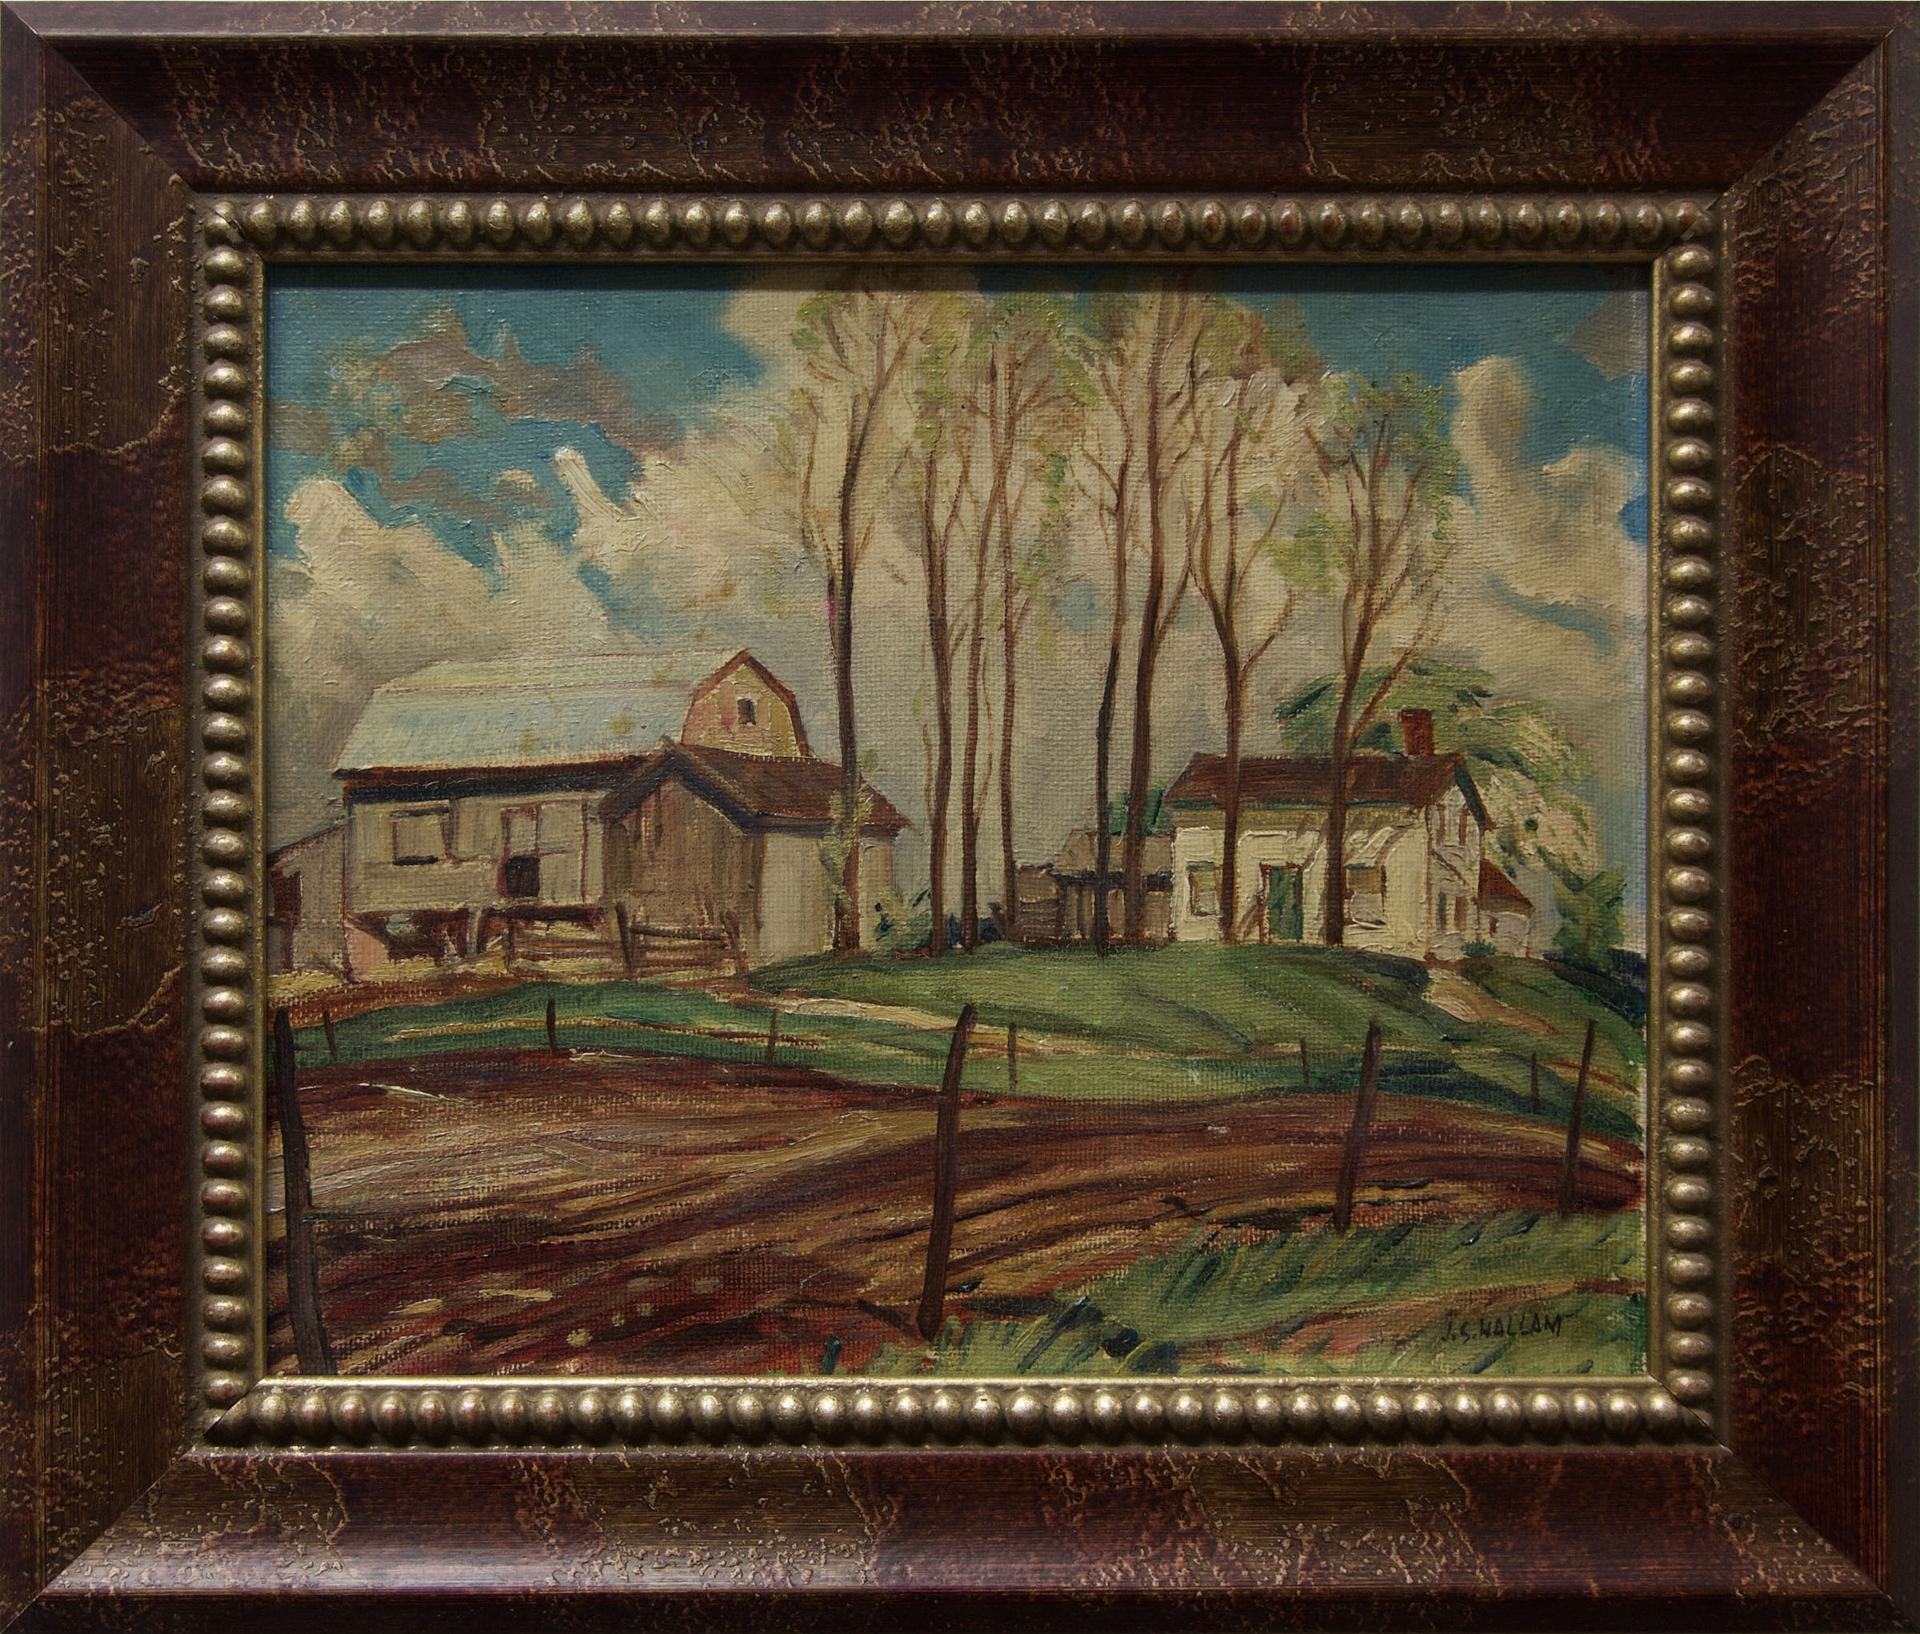 Joseph Sydney Hallam (1899-1953) - Untitled (The Old Farm)